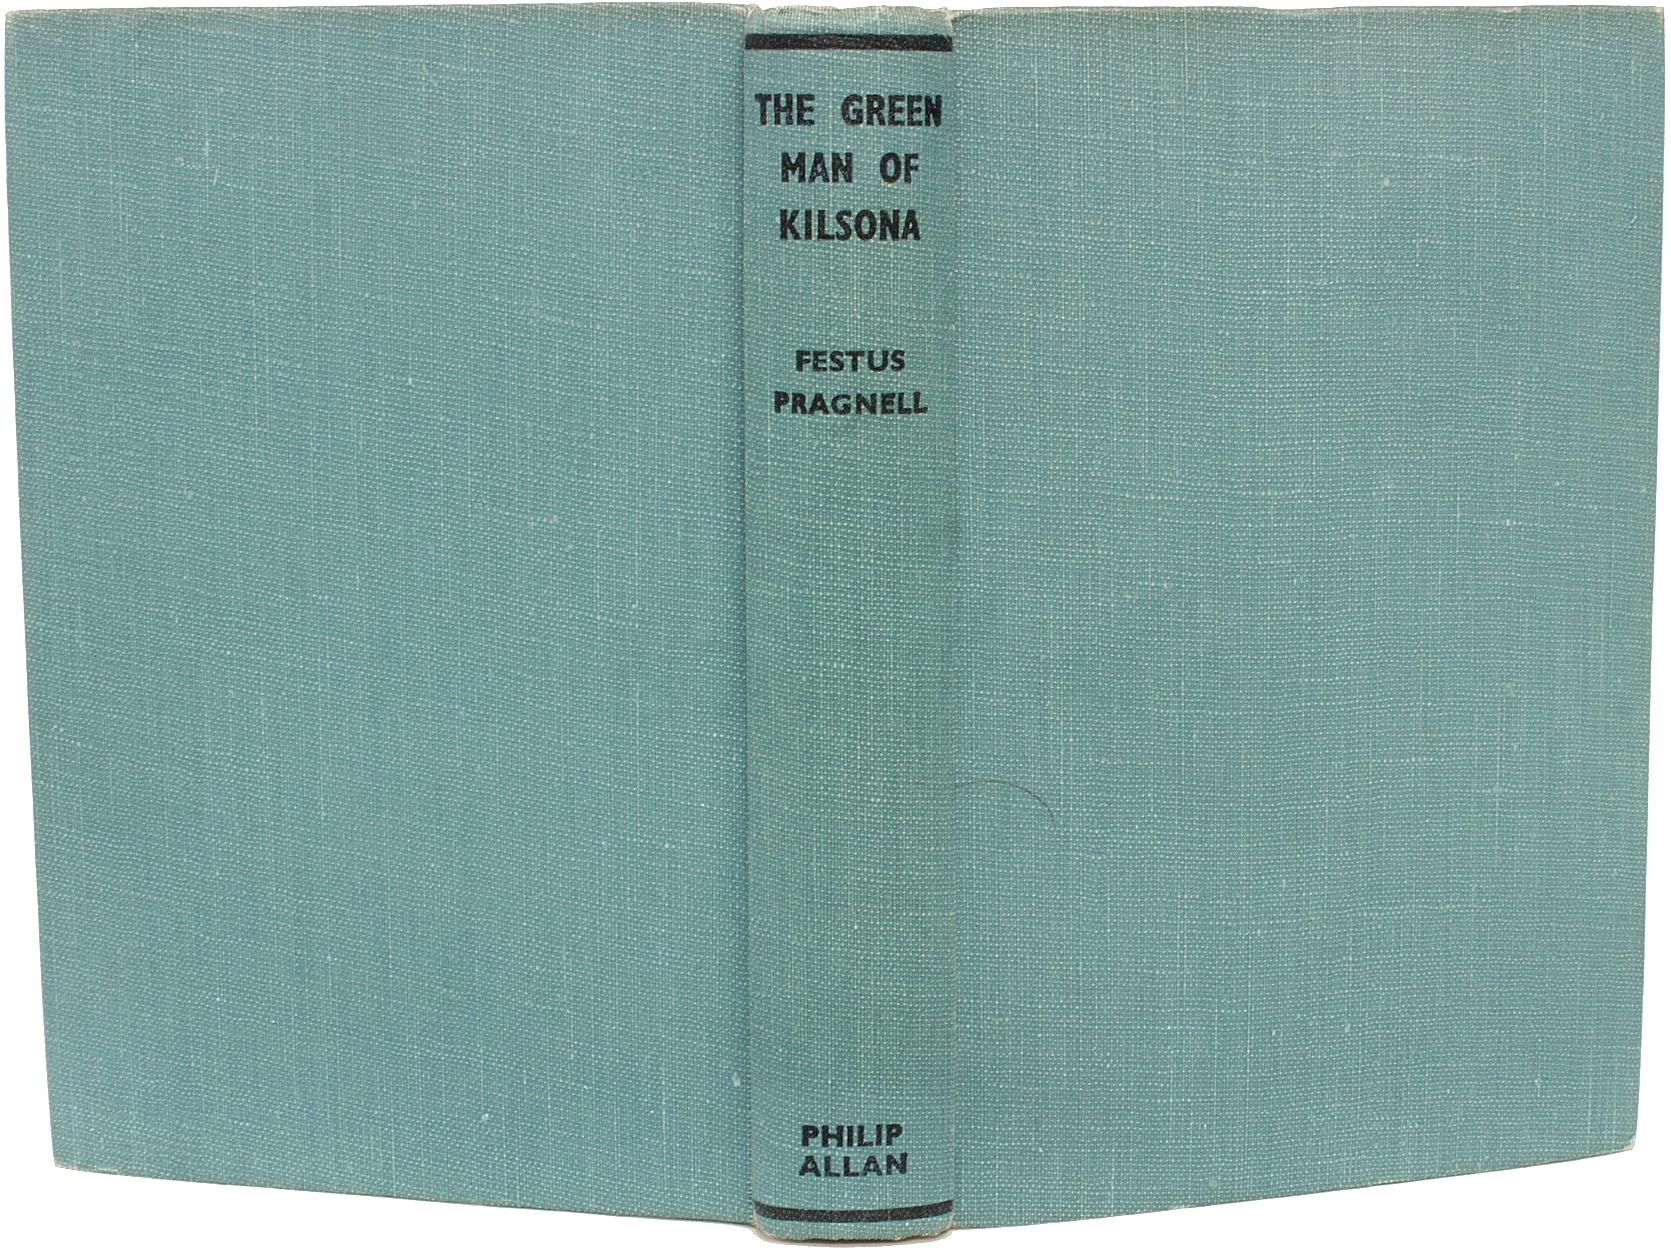 Fabric Festus Pragnell, the Green Man of Kilsona, First Edition Presentation Copy, 1936 For Sale